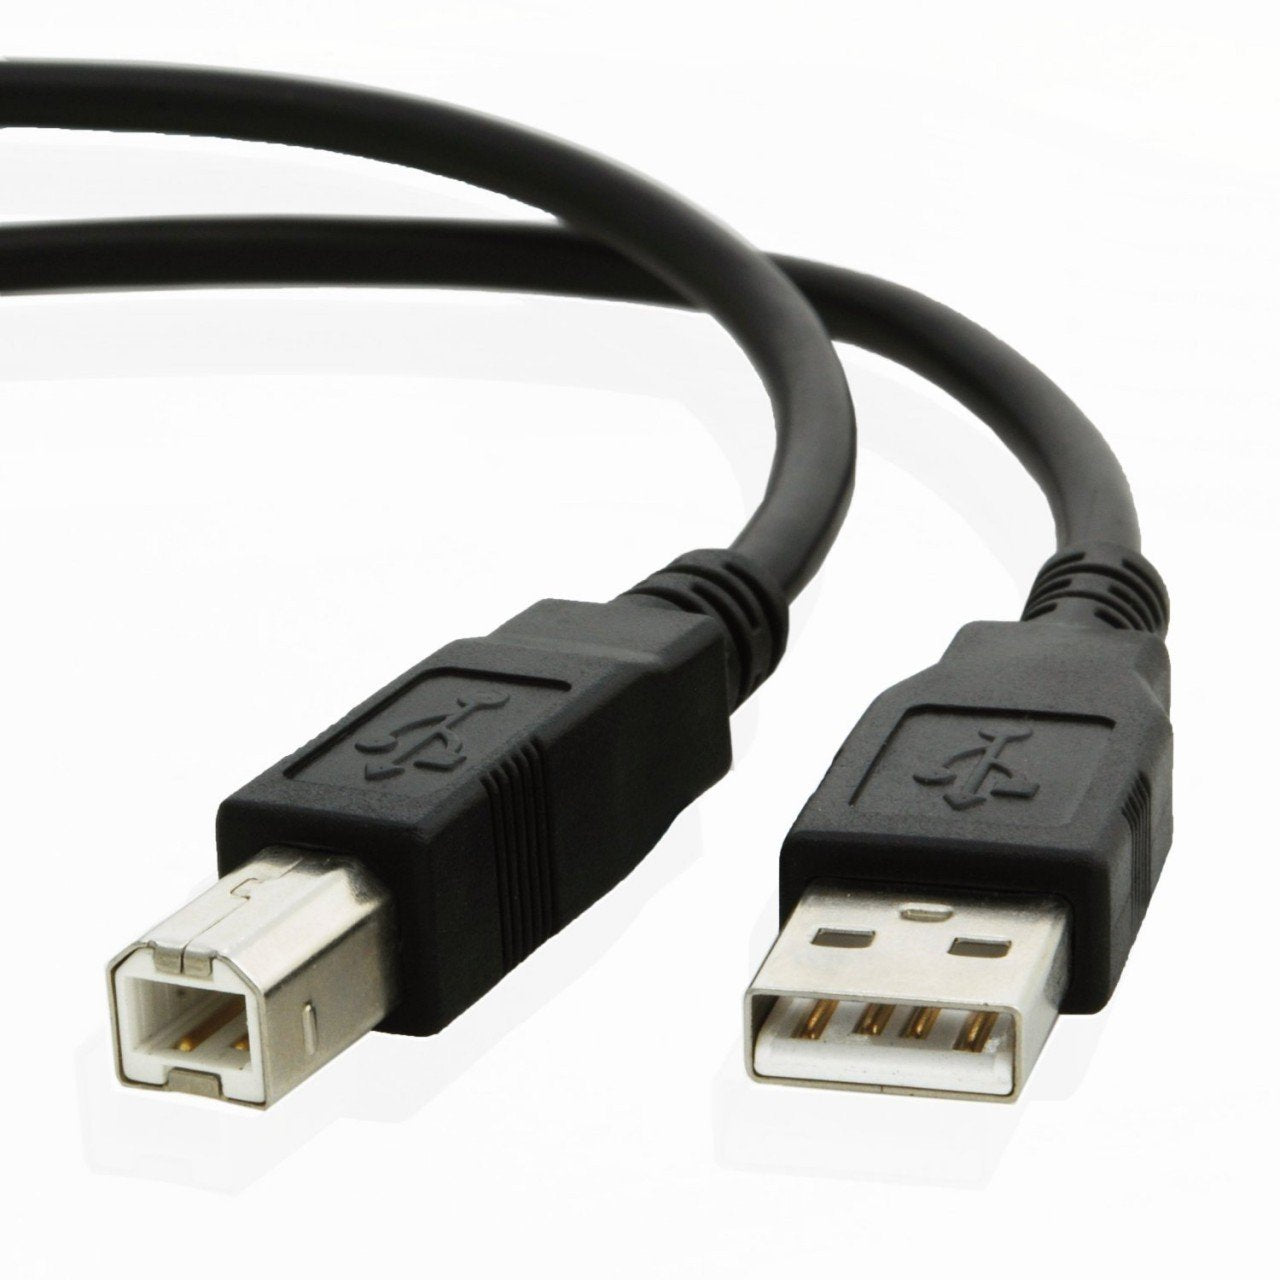 USB cable for Fujitsu FI 6240Z